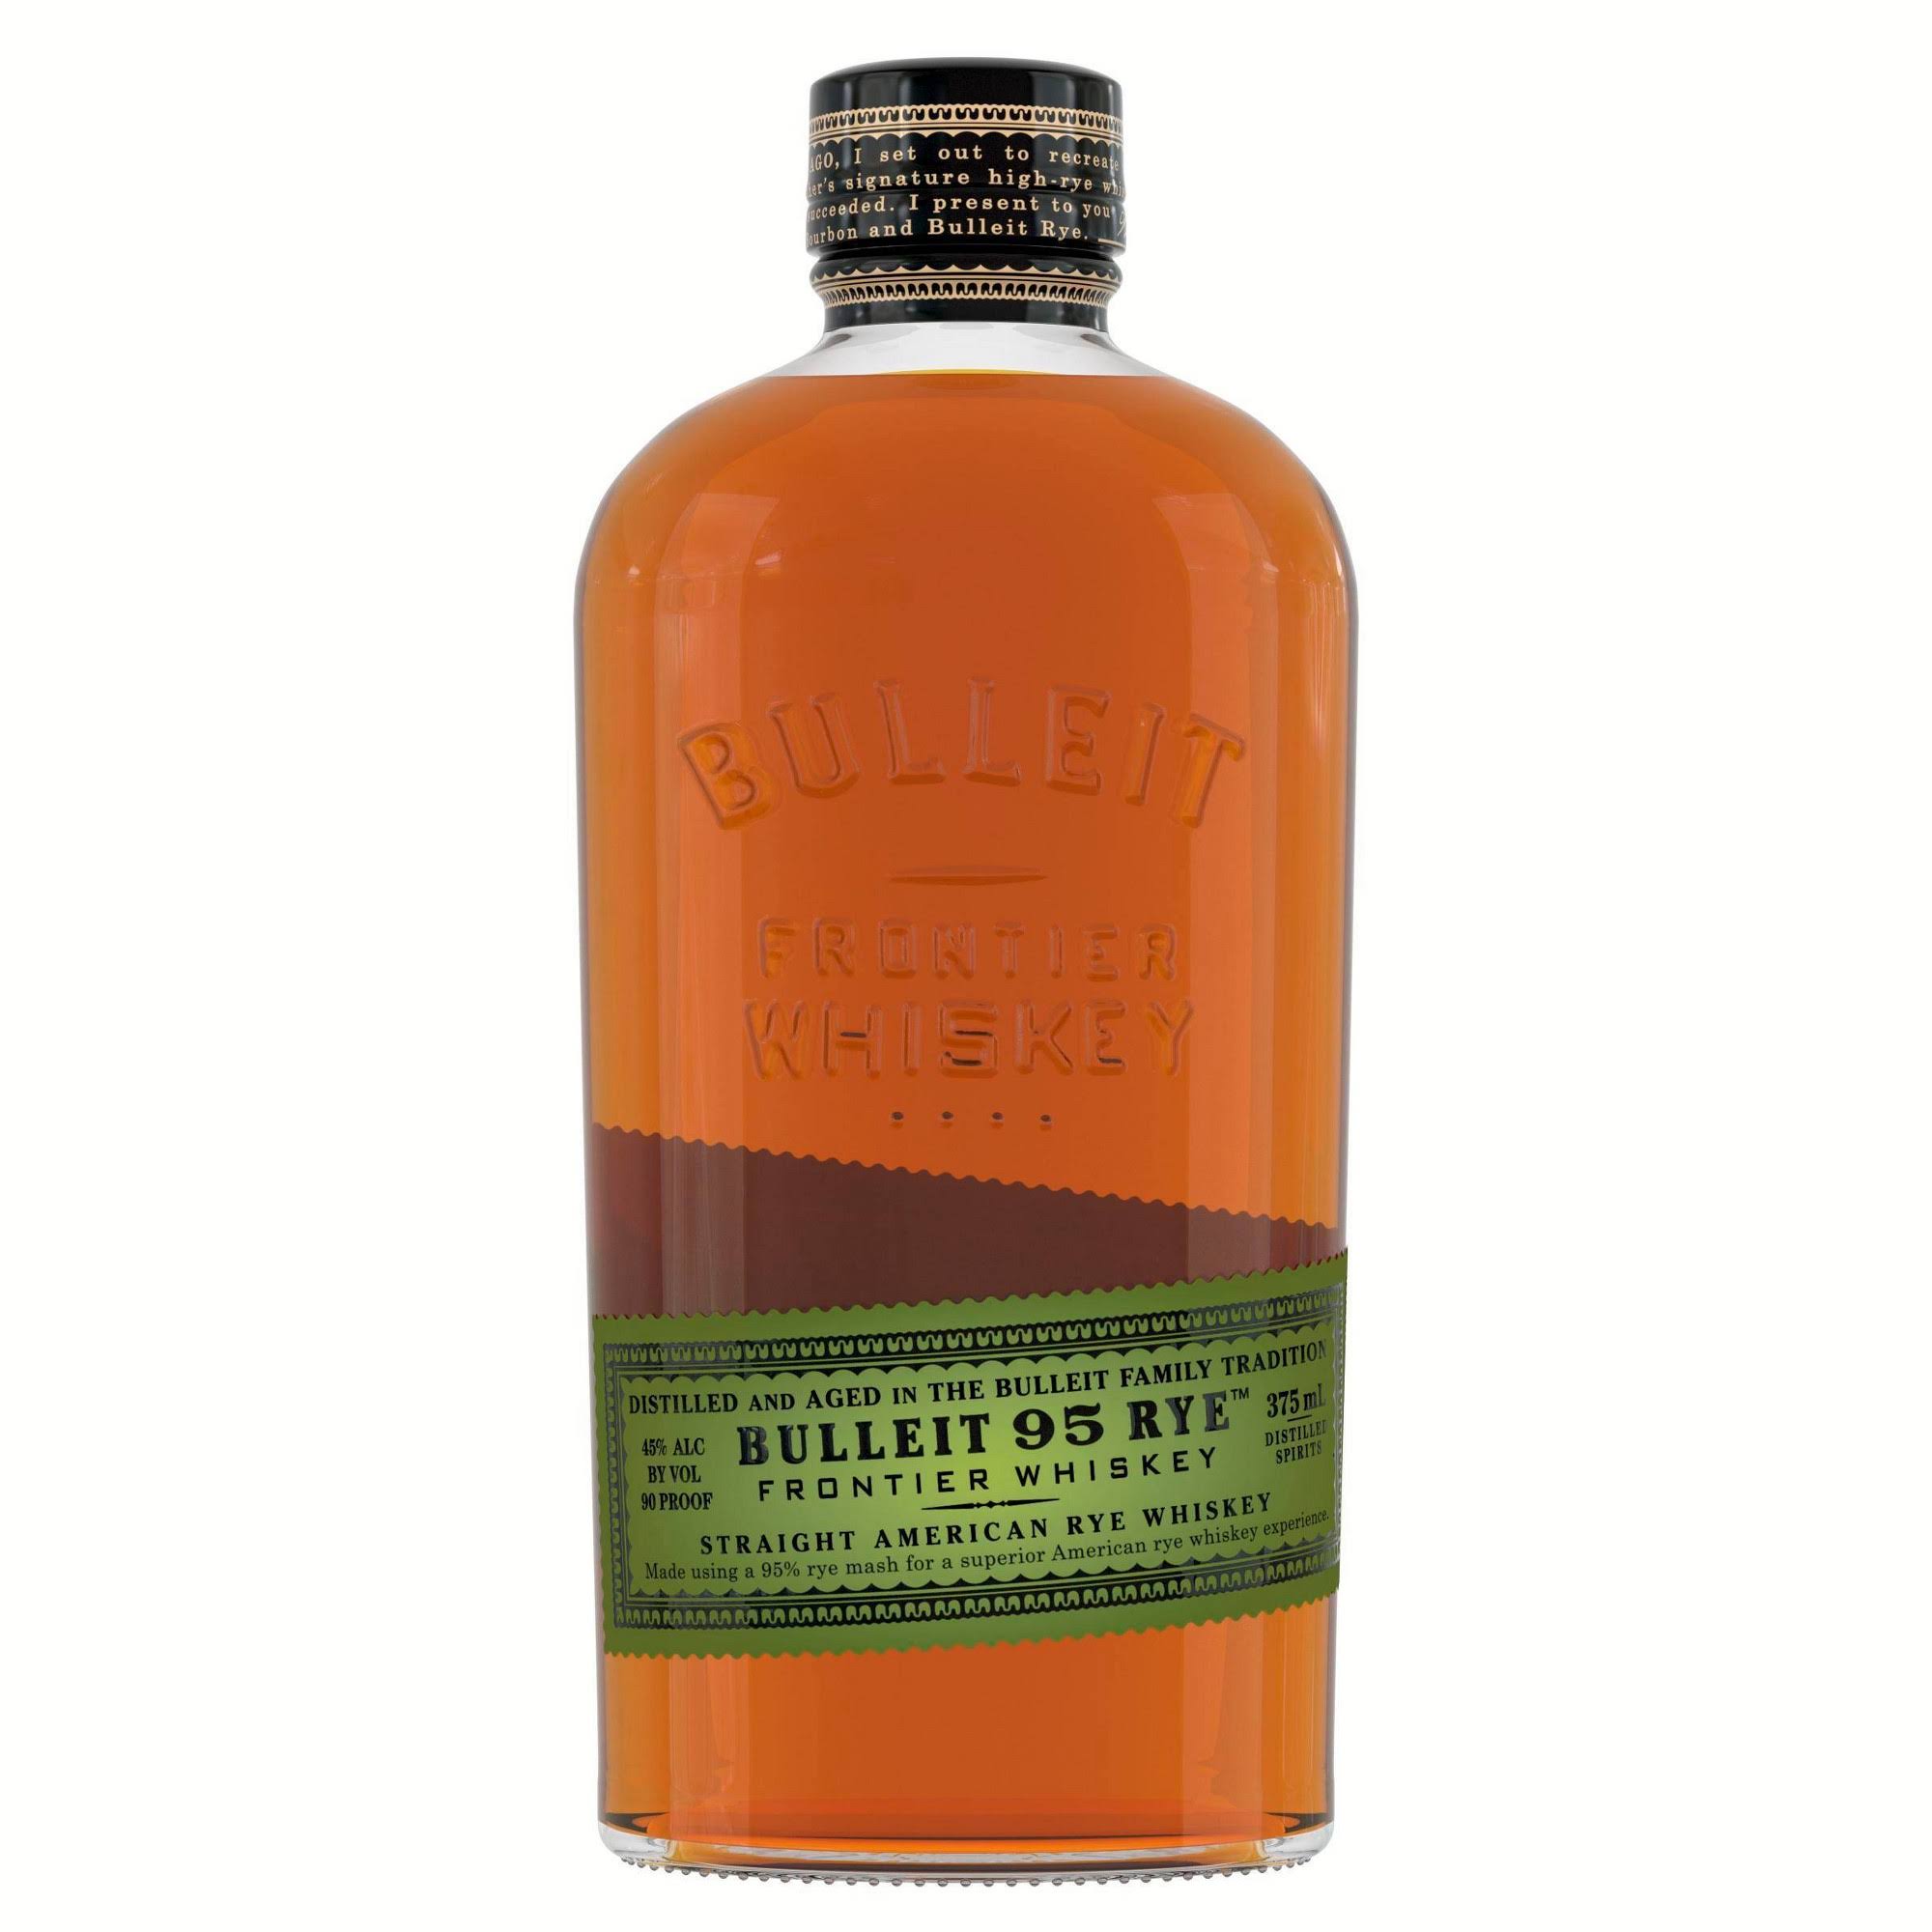 Bulleit Whiskey, Frontier, Bulleit 95 Rye - 375 ml